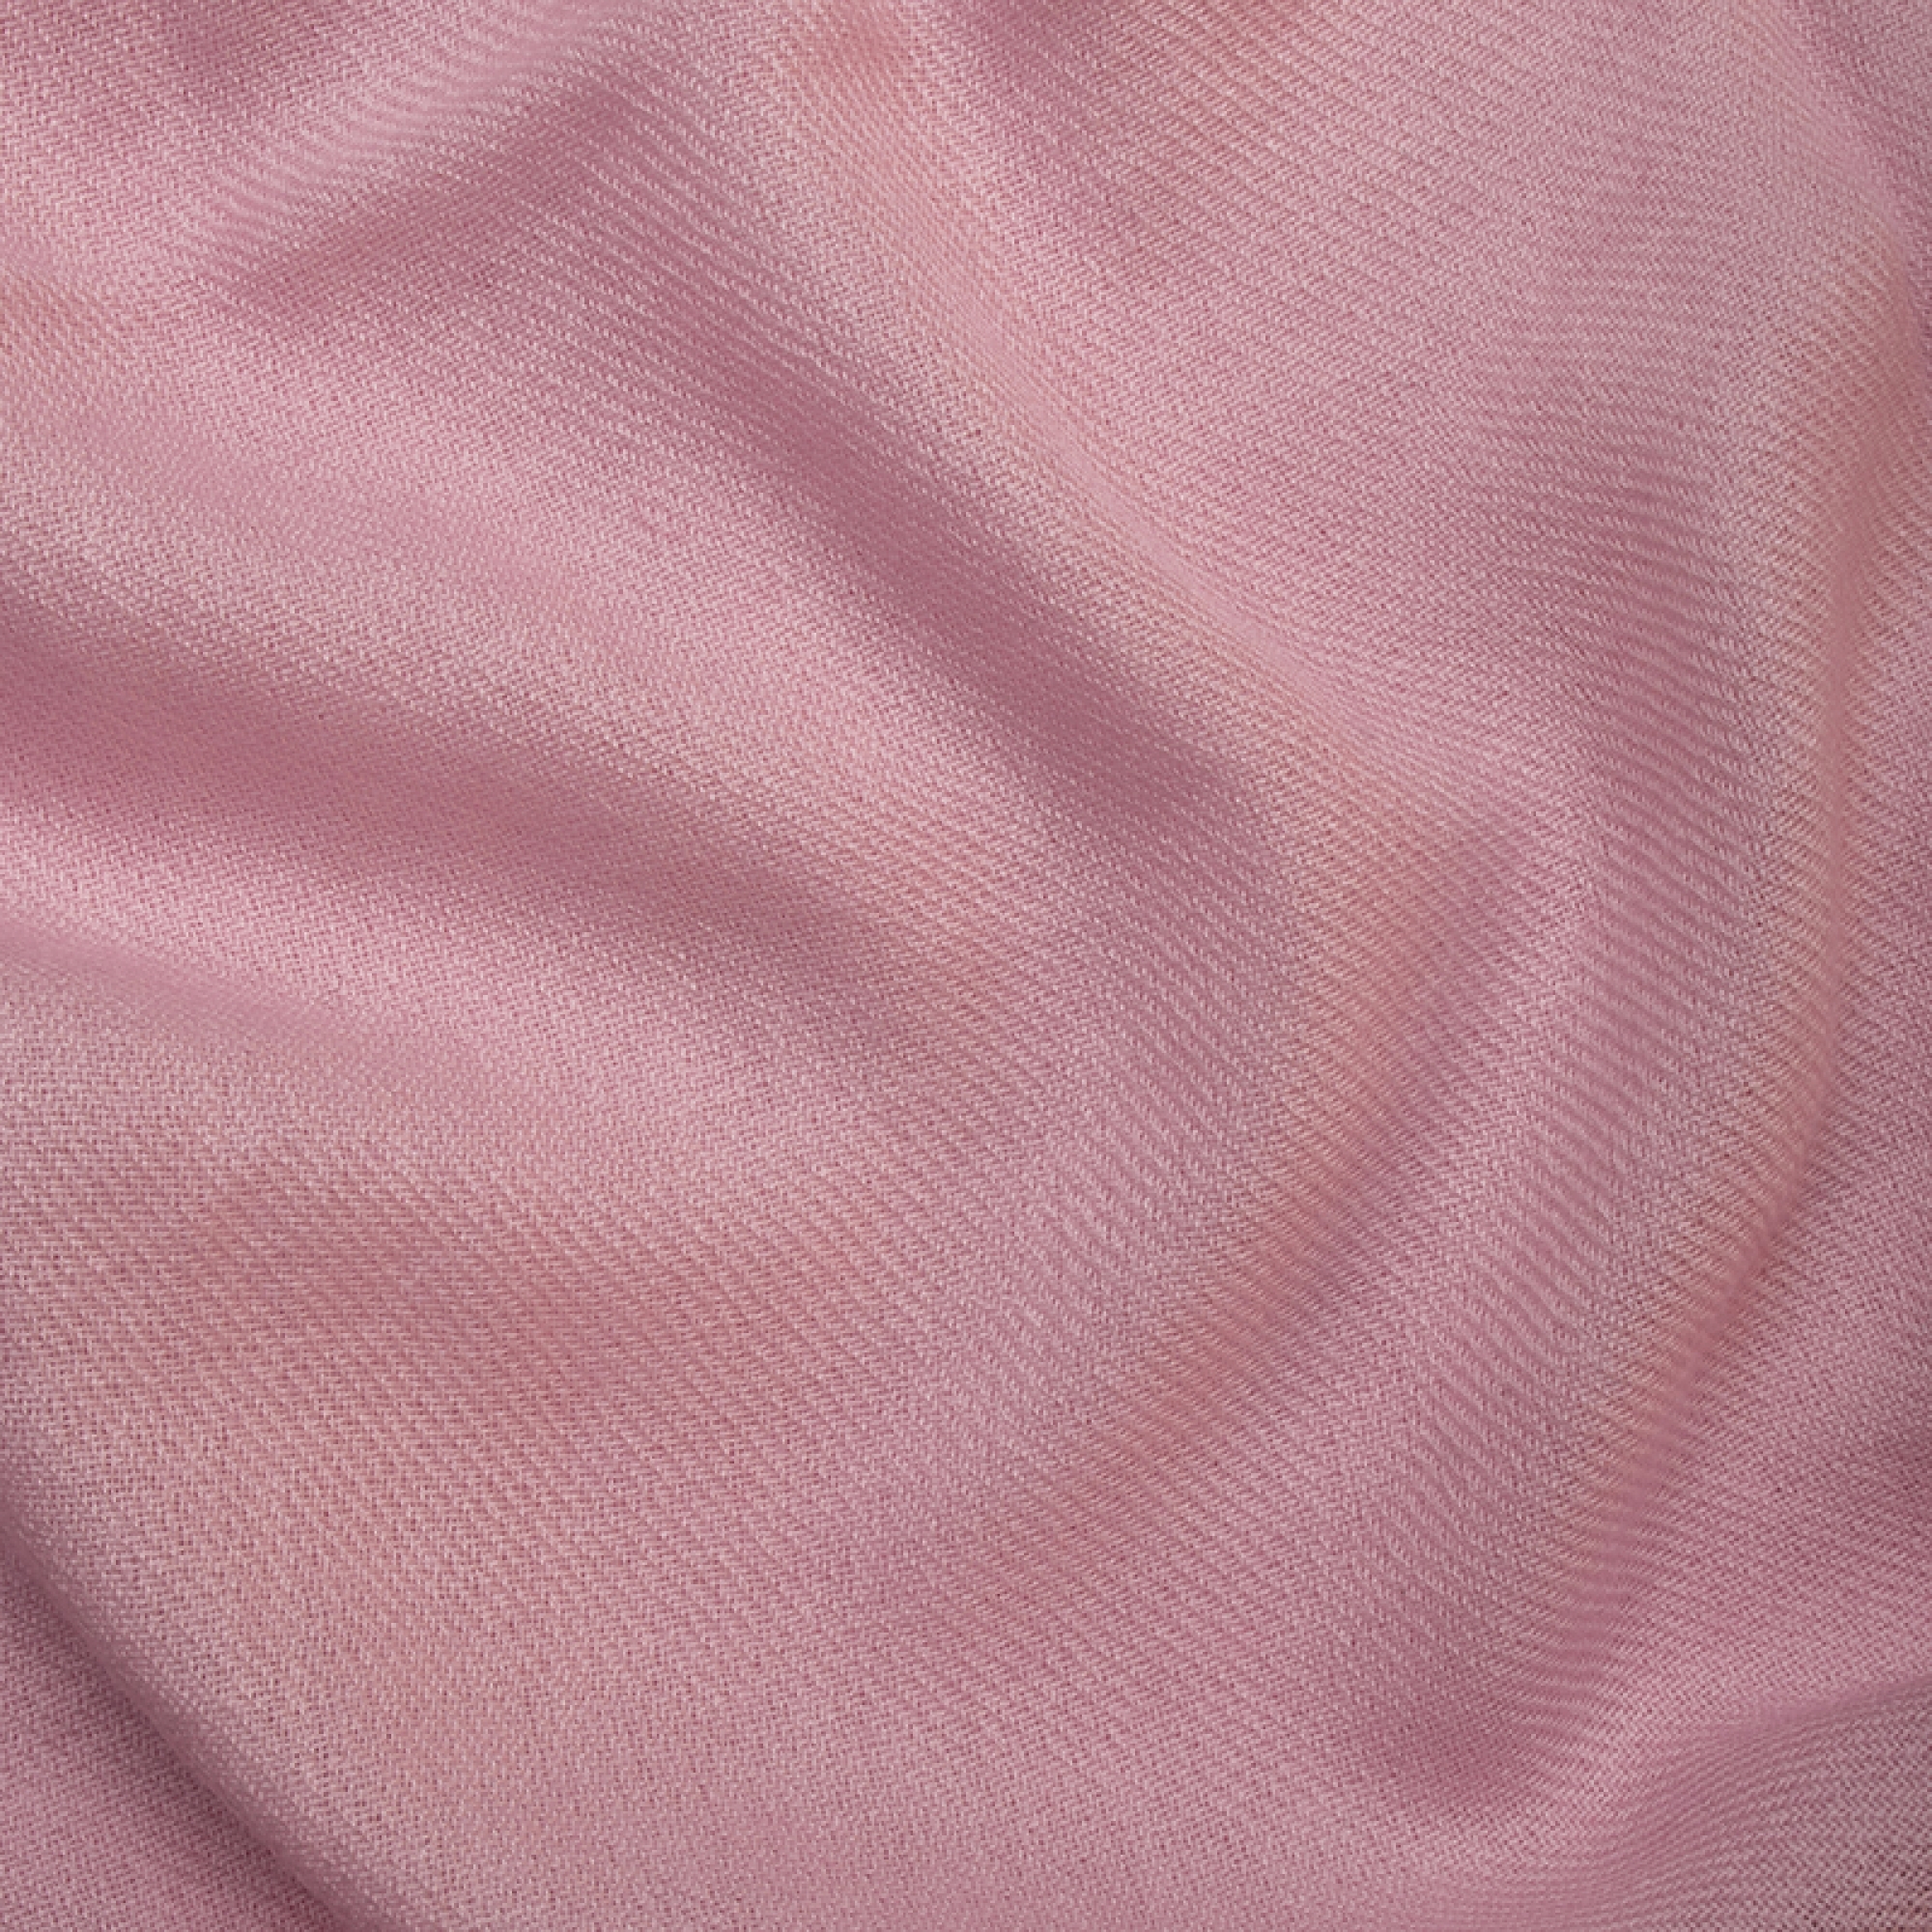 Cashmere uomo cocooning toodoo plain l 220 x 220 rosa pallido 220x220cm